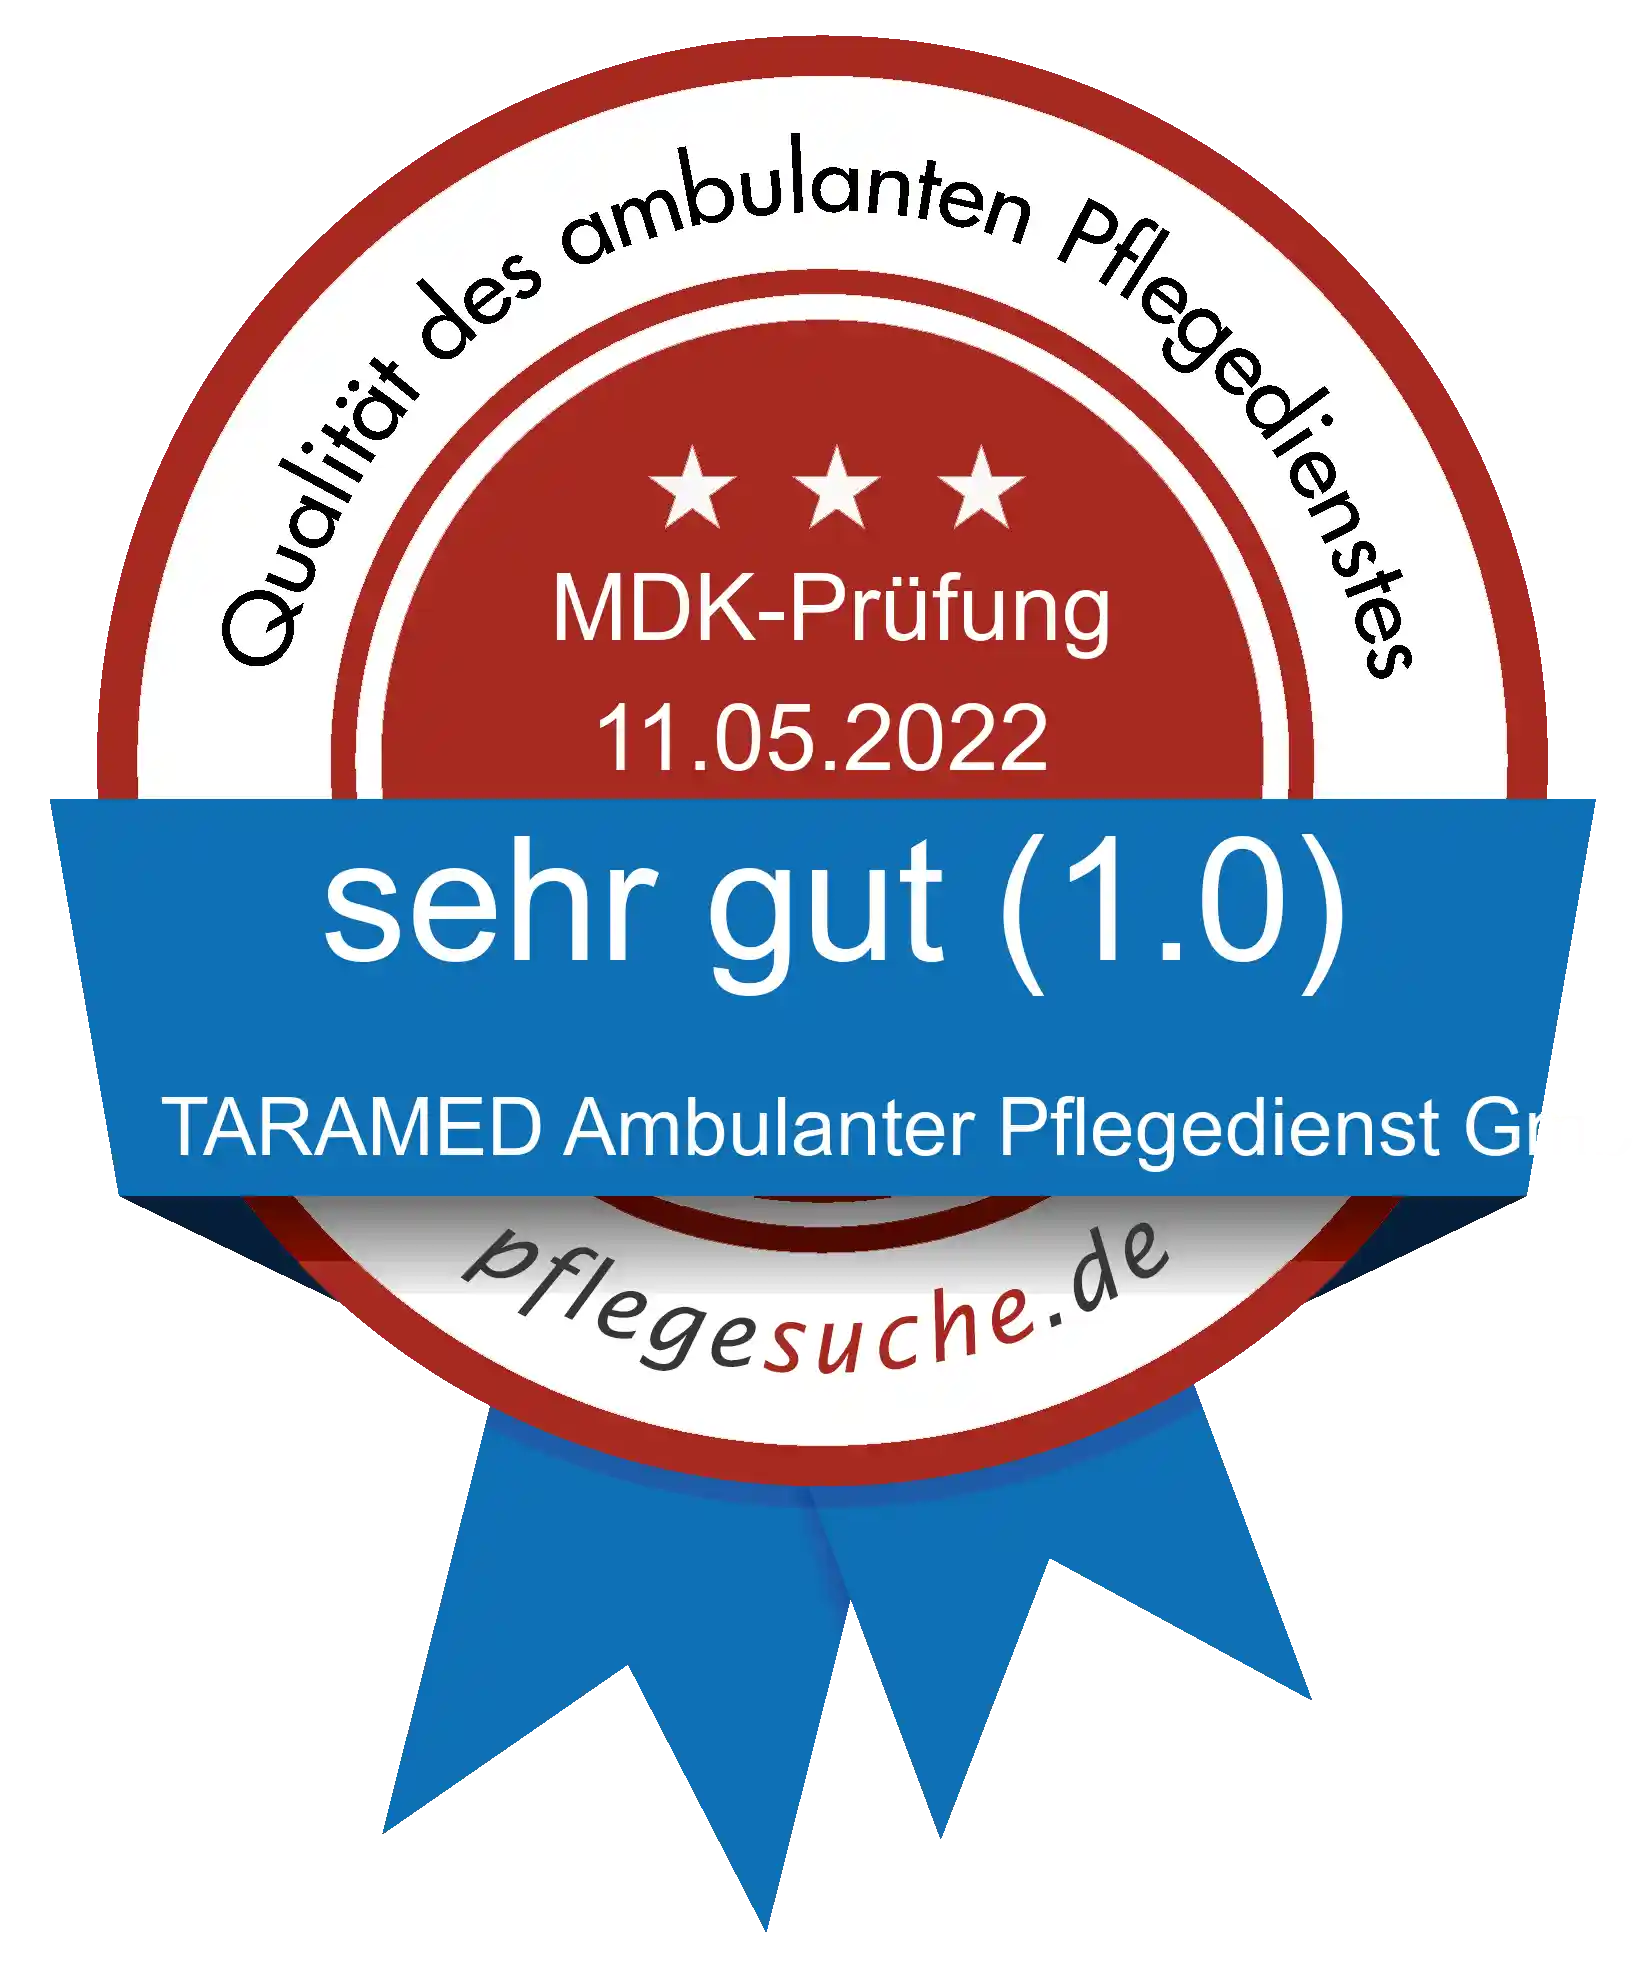 Siegel Benotung: TARAMED Ambulanter Pflegedienst GmbH